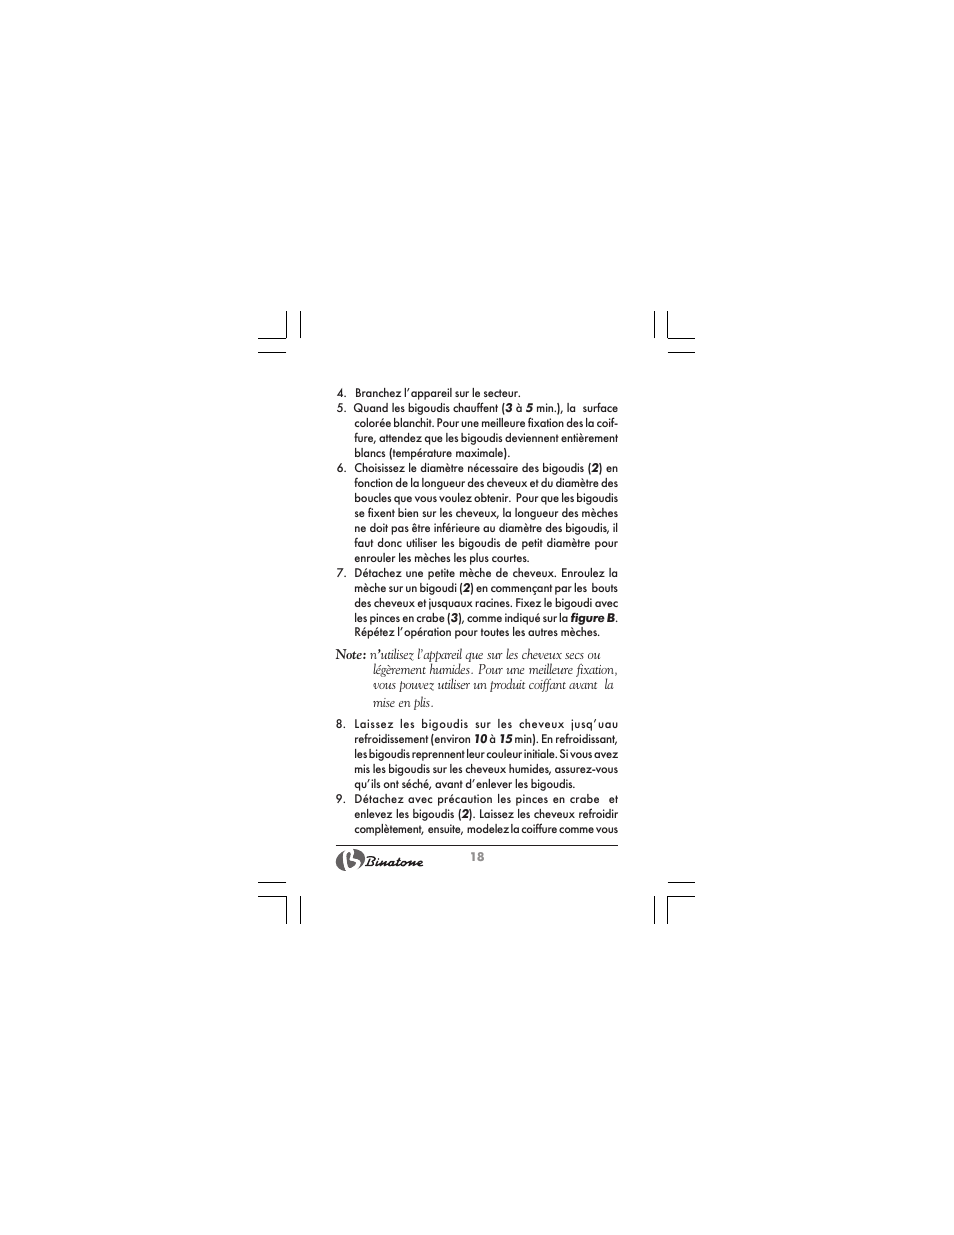 Binatone HR-09 User Manual | Page 18 / 48